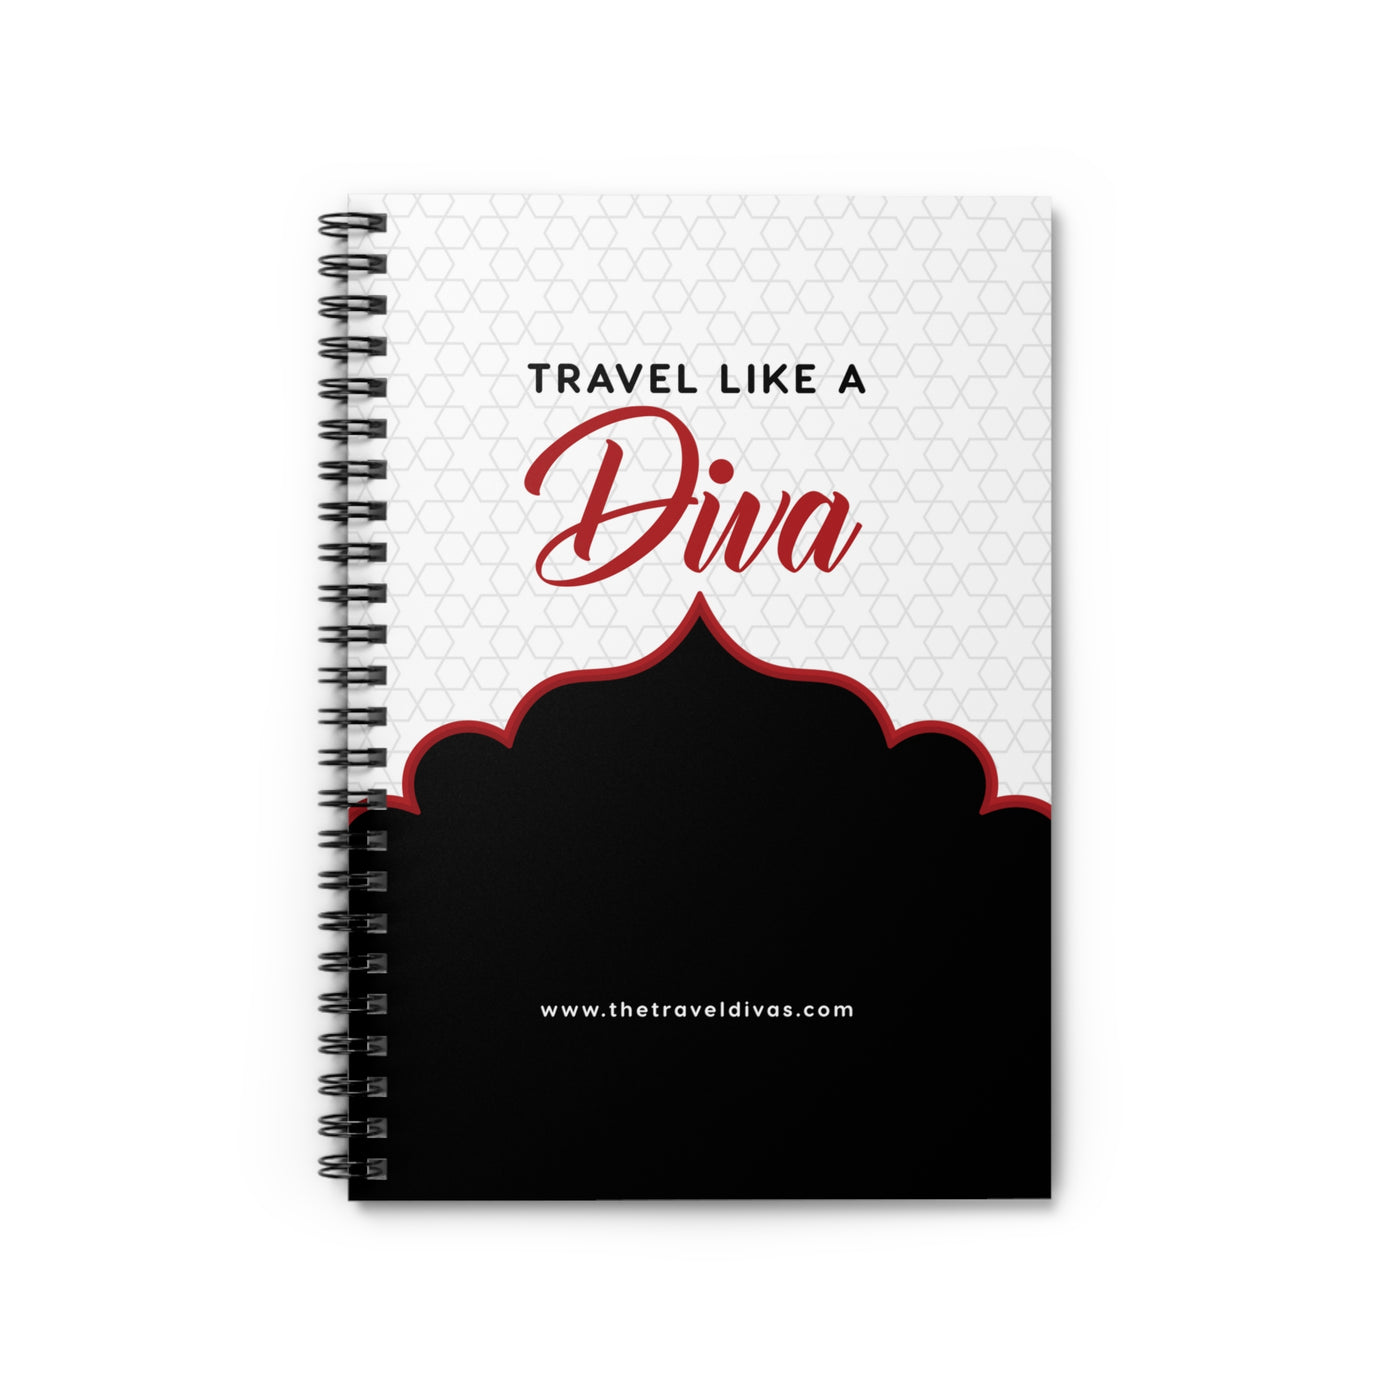 Travel Like a Diva Notebook - Ruled Line